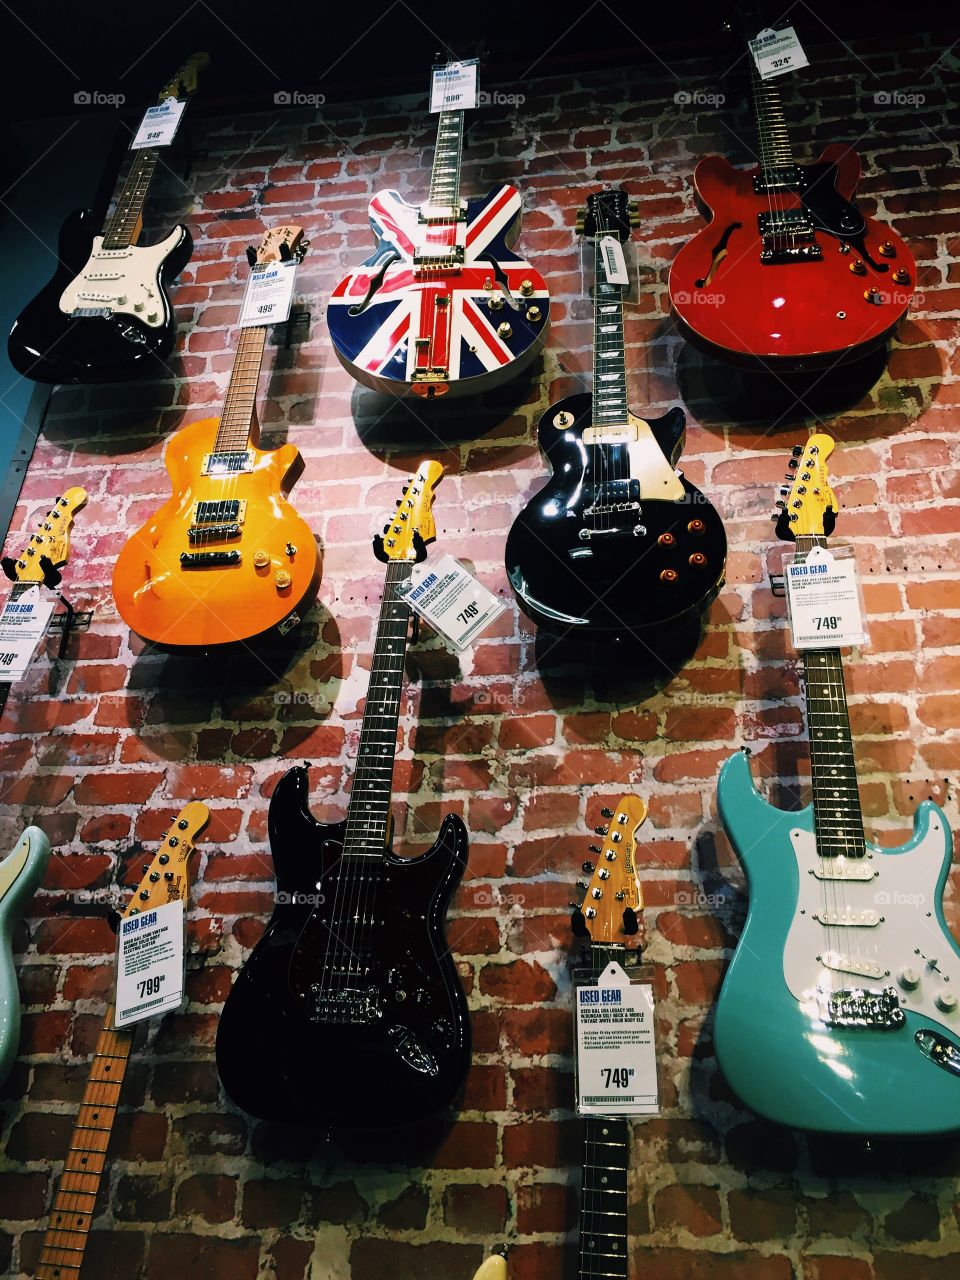 Guitar wall.